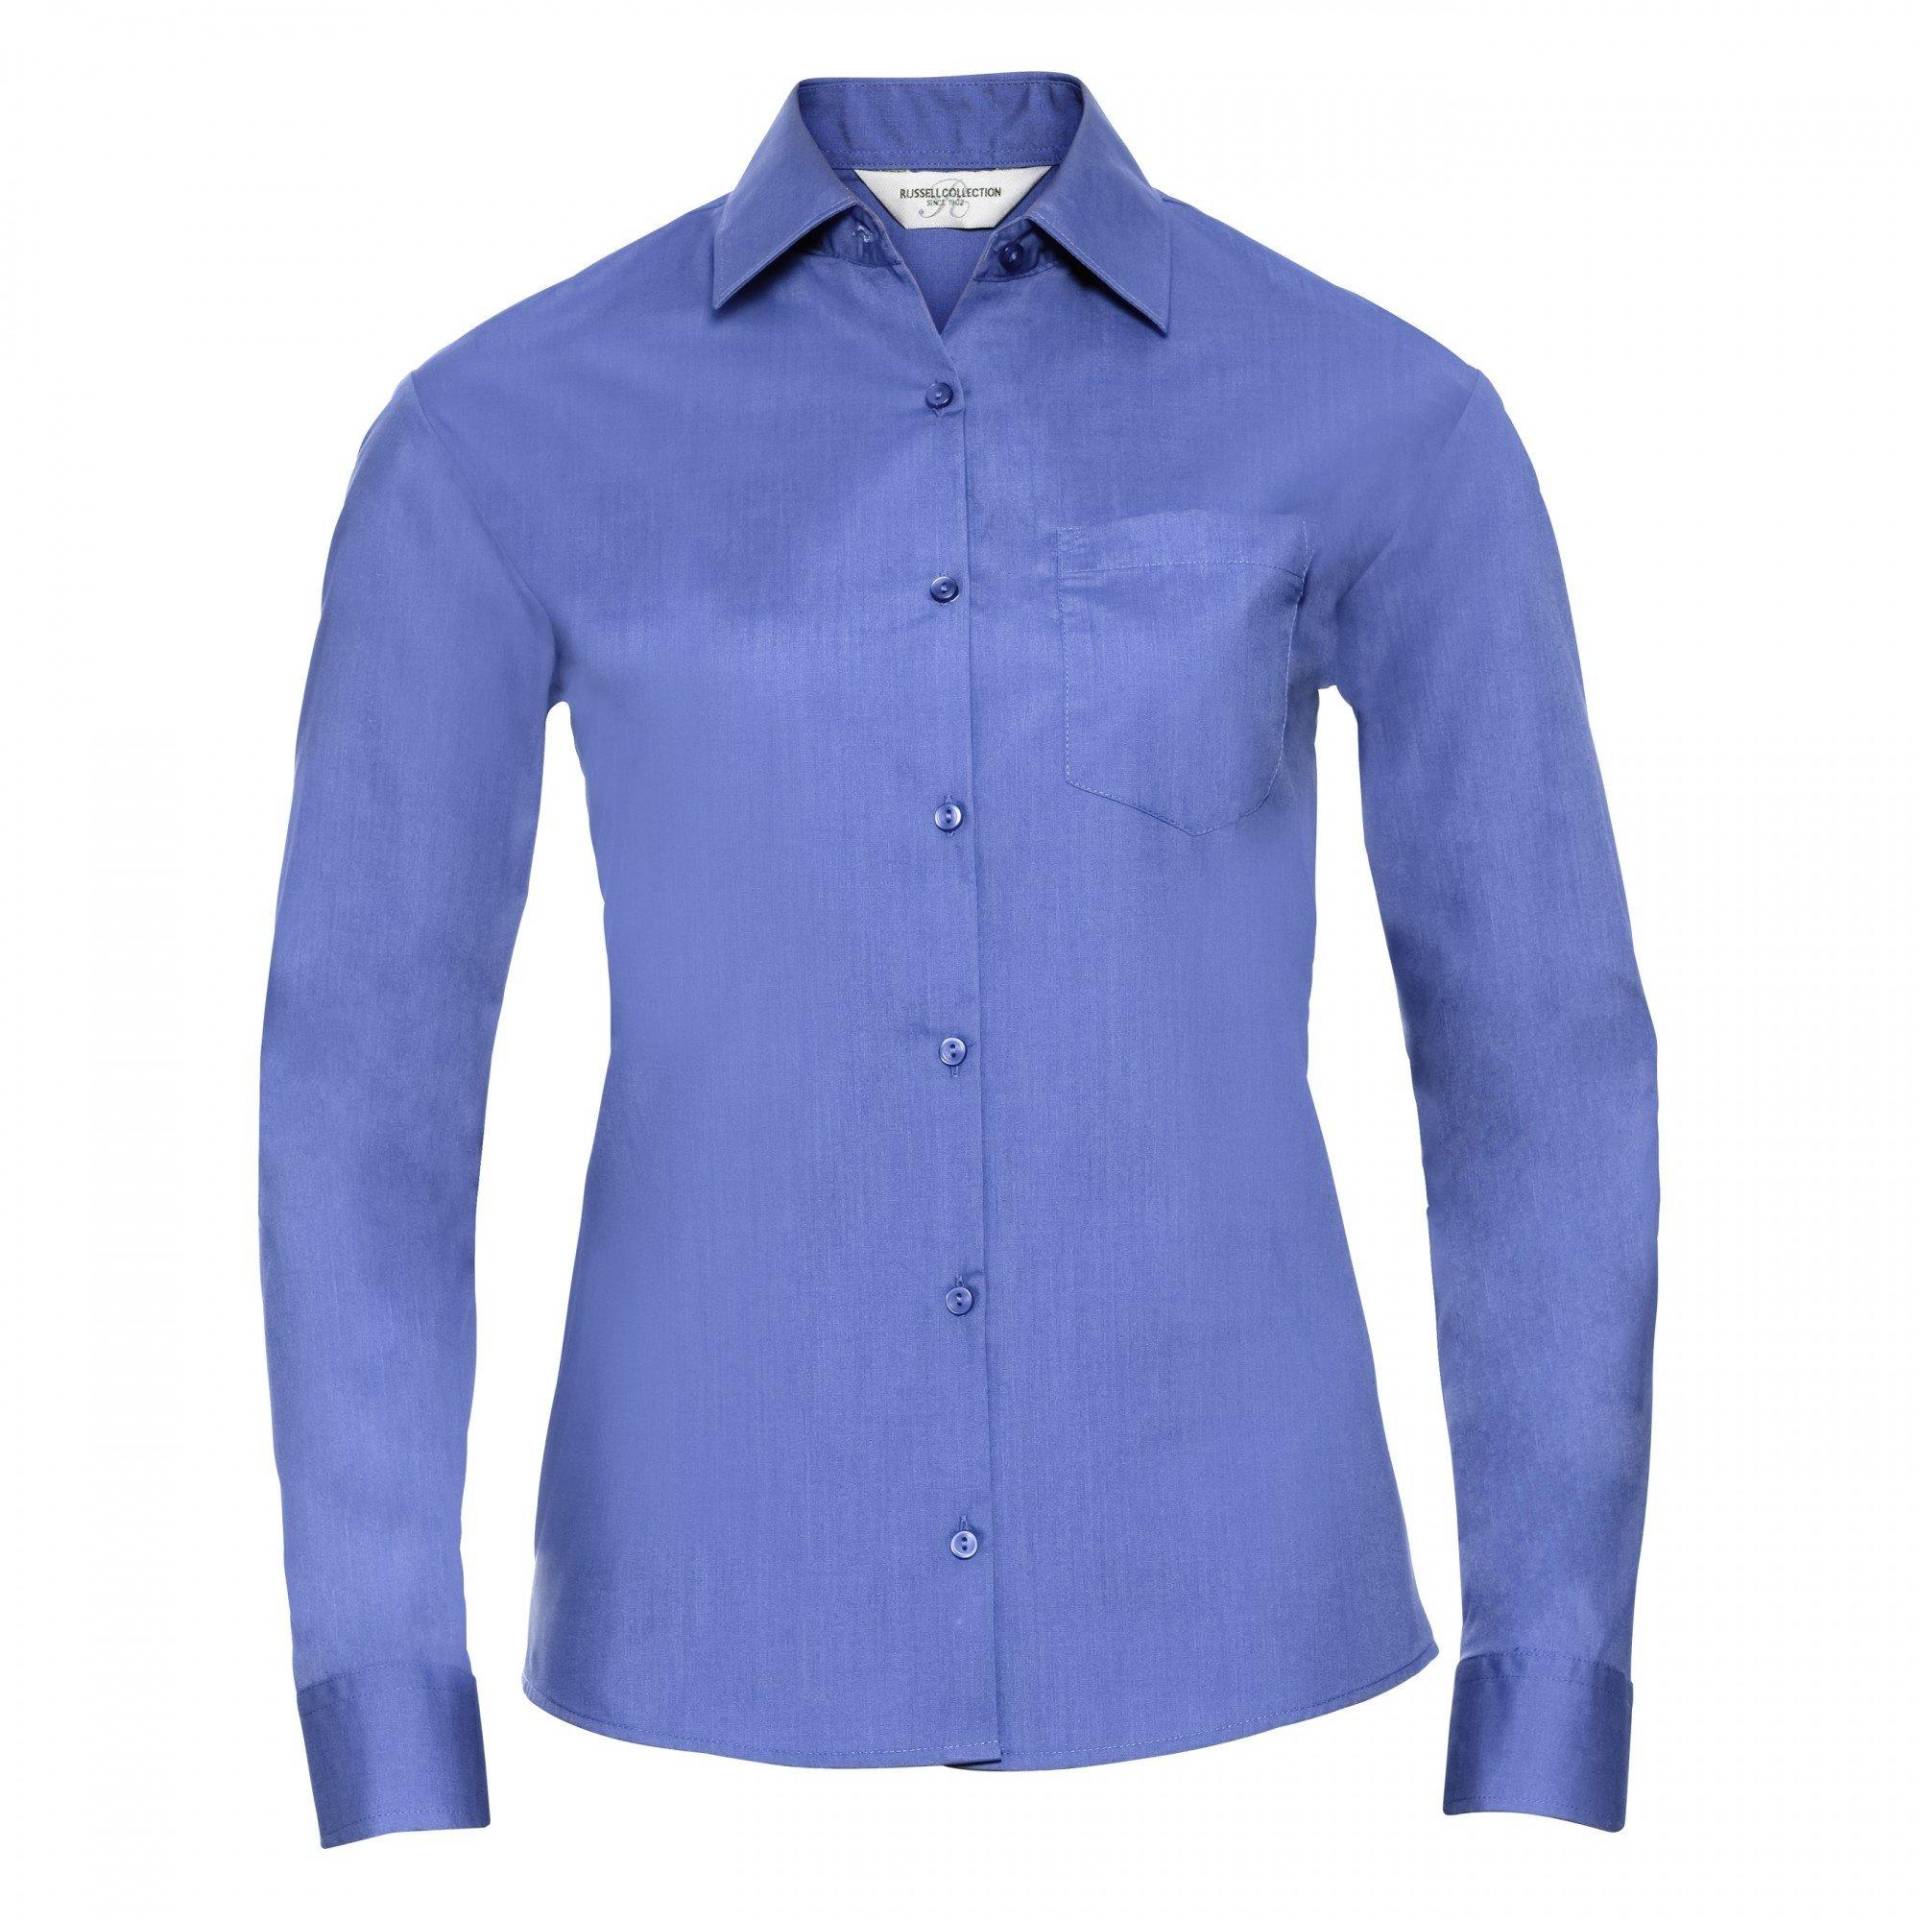 Kollektion Langarm-shirt Damen Blau XXL von Russell